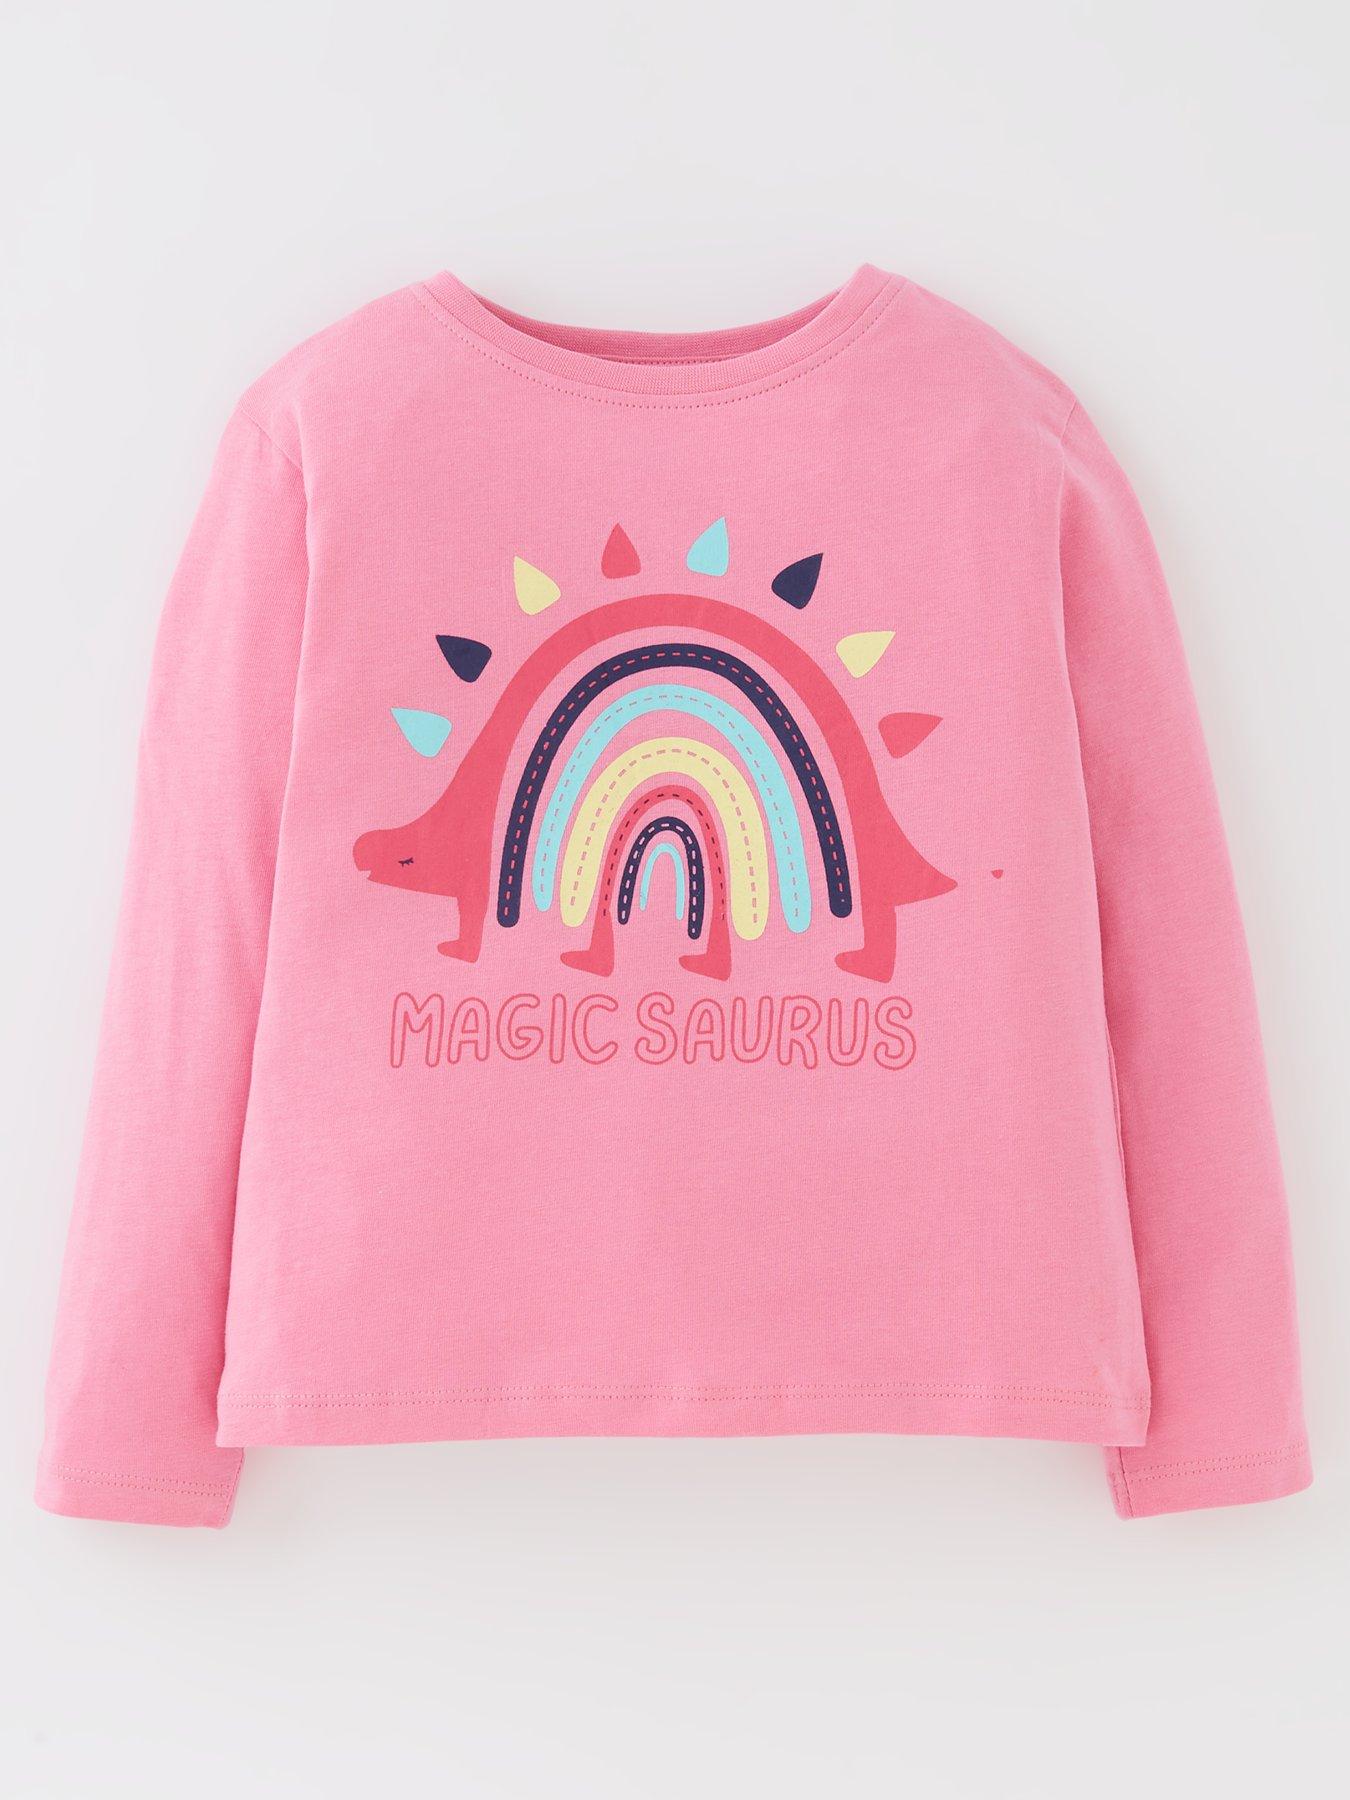 KIDS FASHION Shirts & T-shirts Ruffle NoName T-shirt discount 98% Pink/Gray 3-6M 